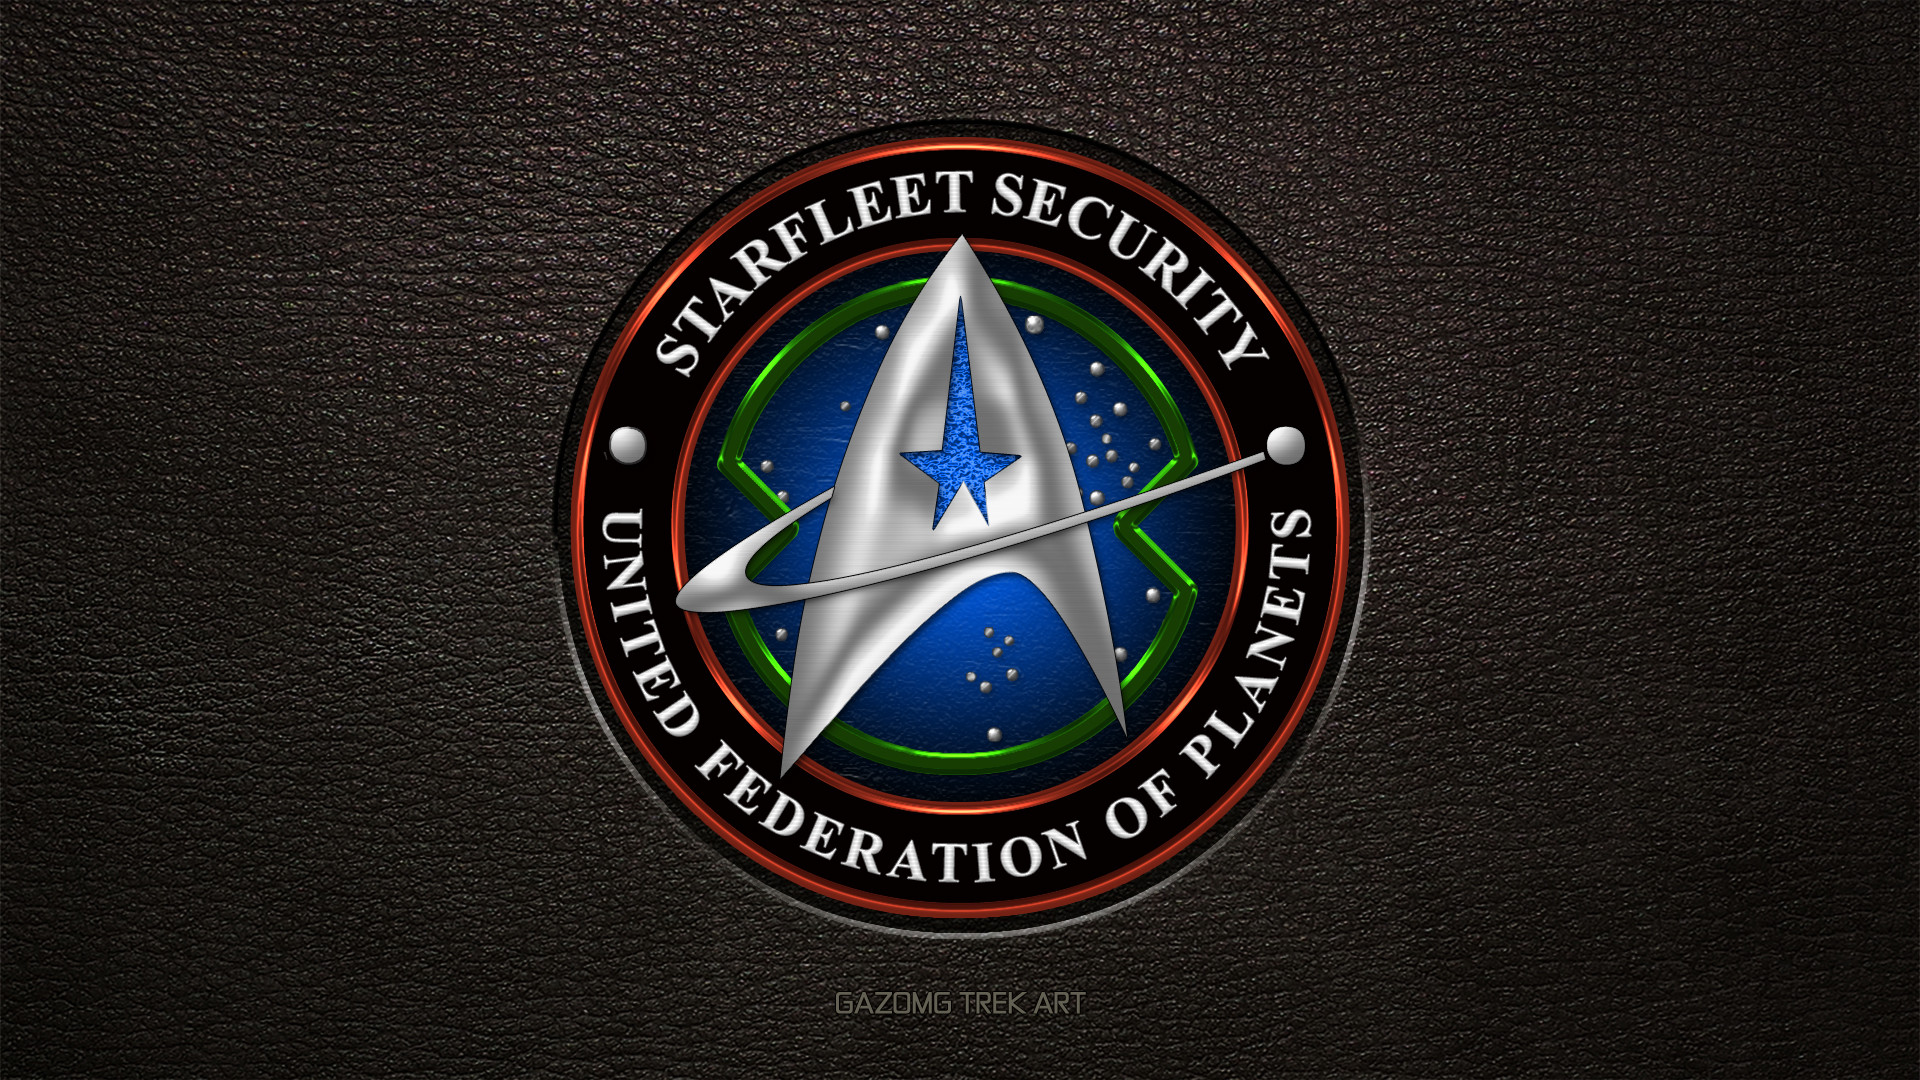 1920x1080 ... Starfleet Security Logo Star Trek by gazomg